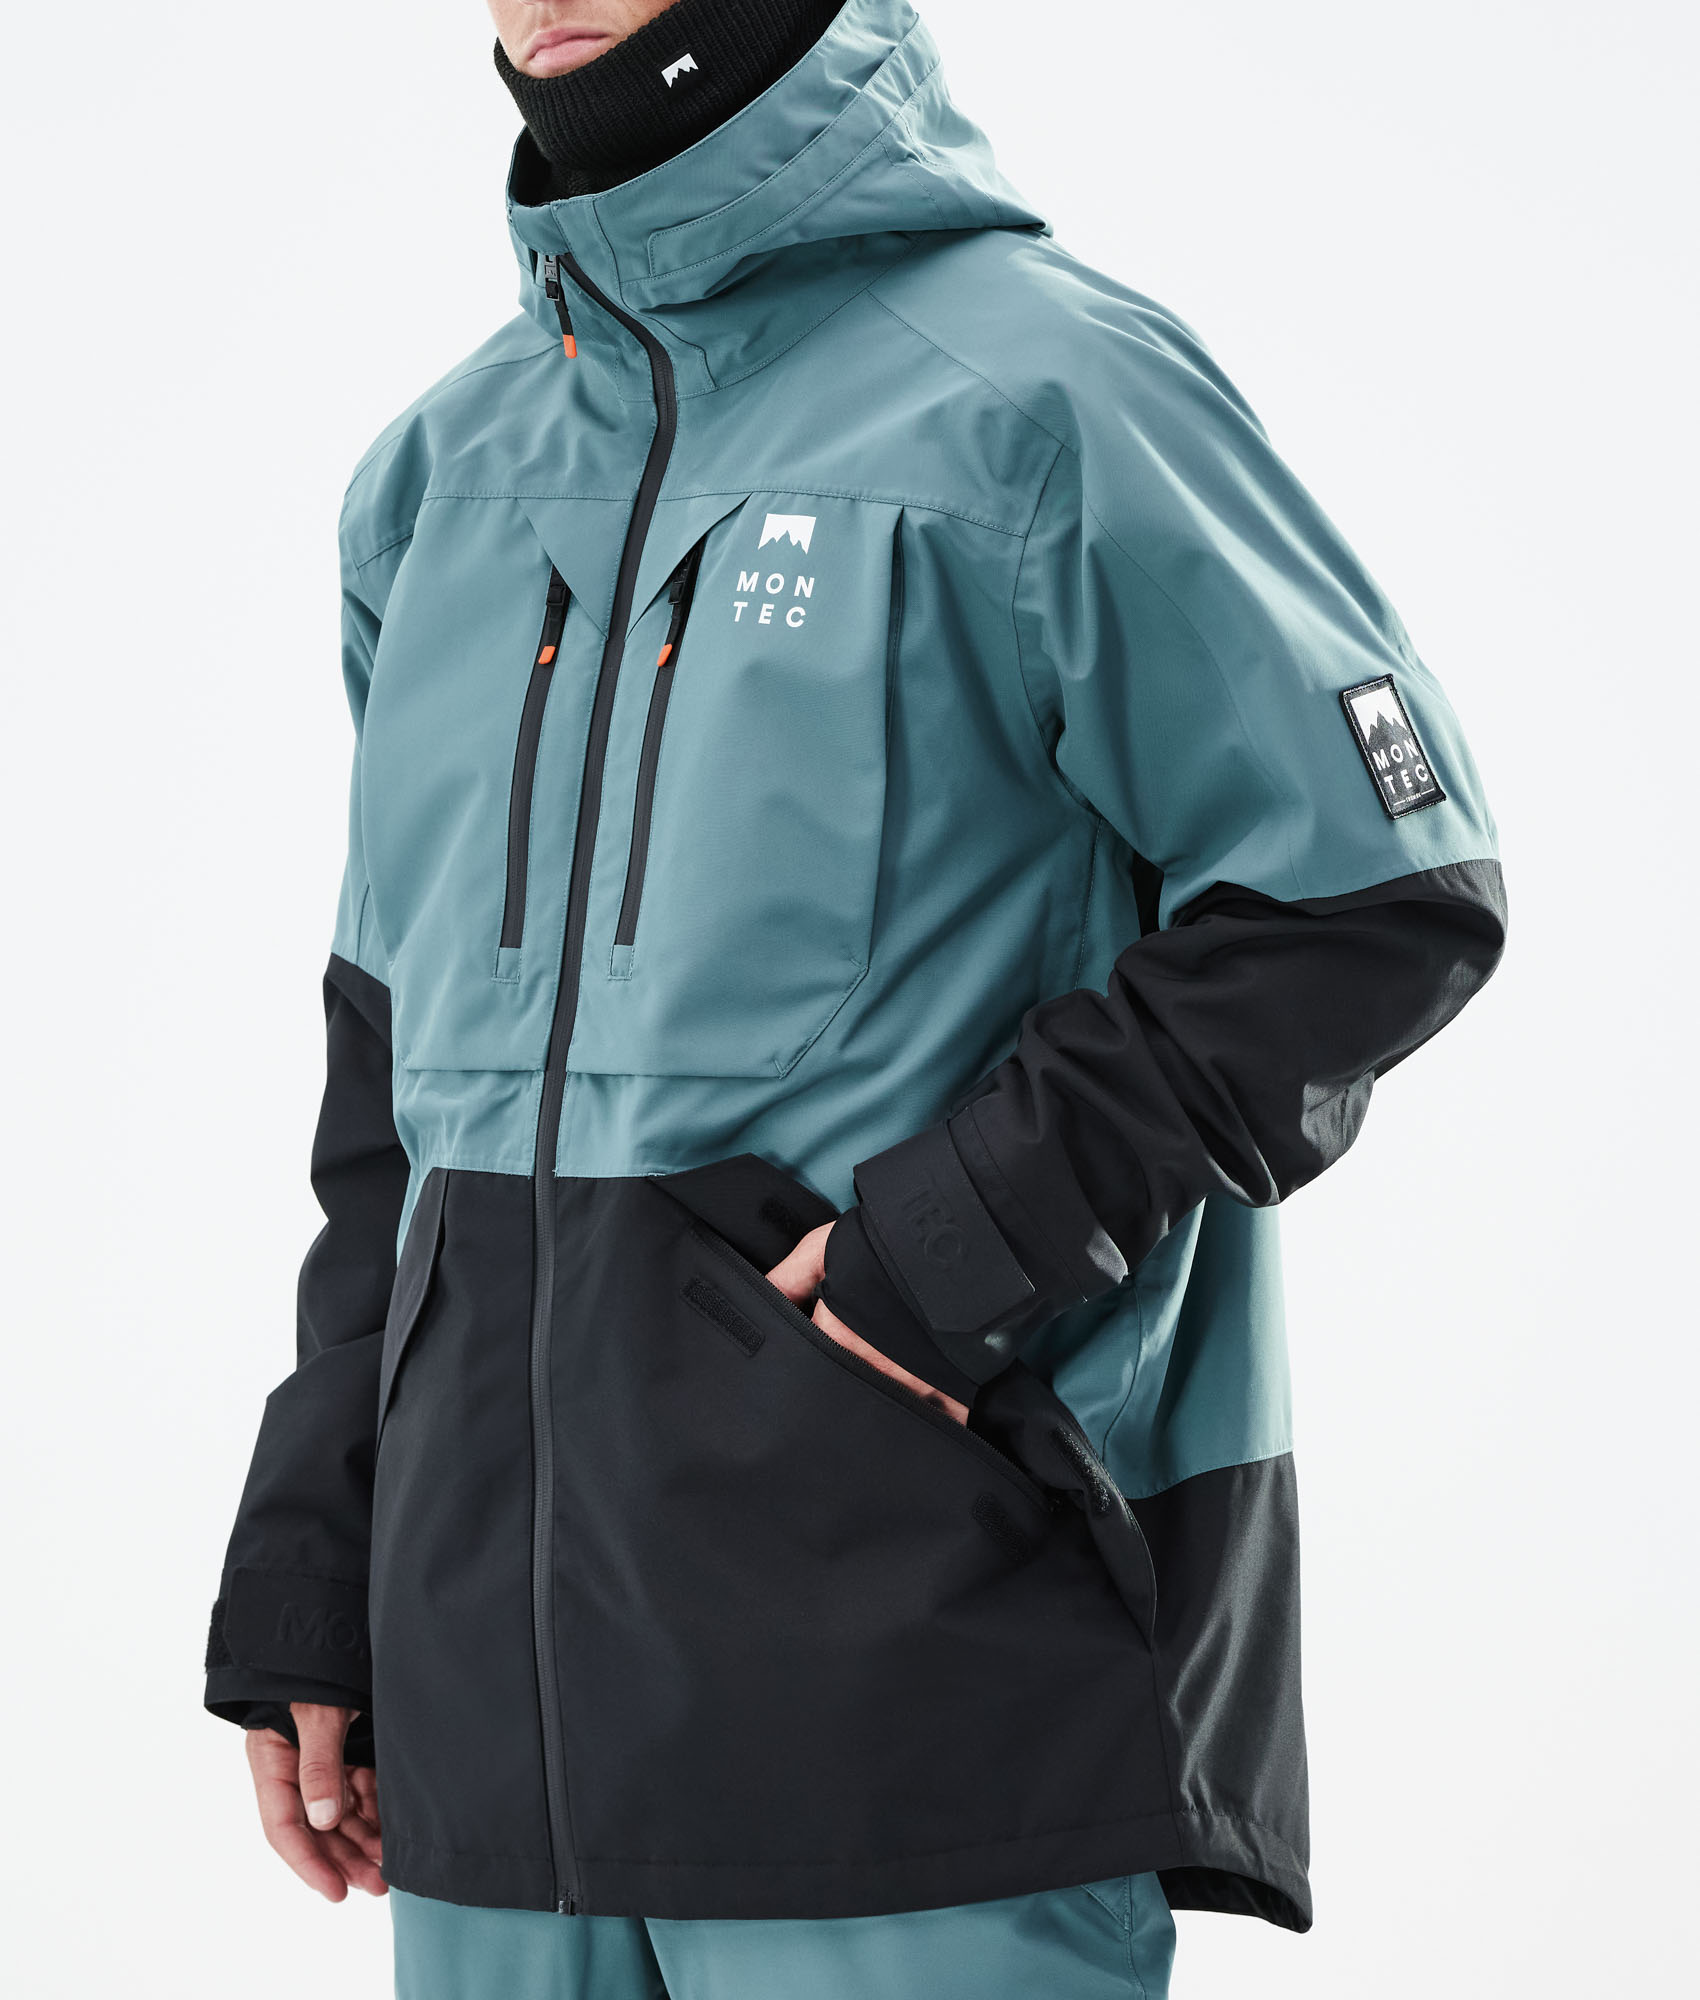 Moss Ski Jacket Atlantic/Black | Montecwear.com